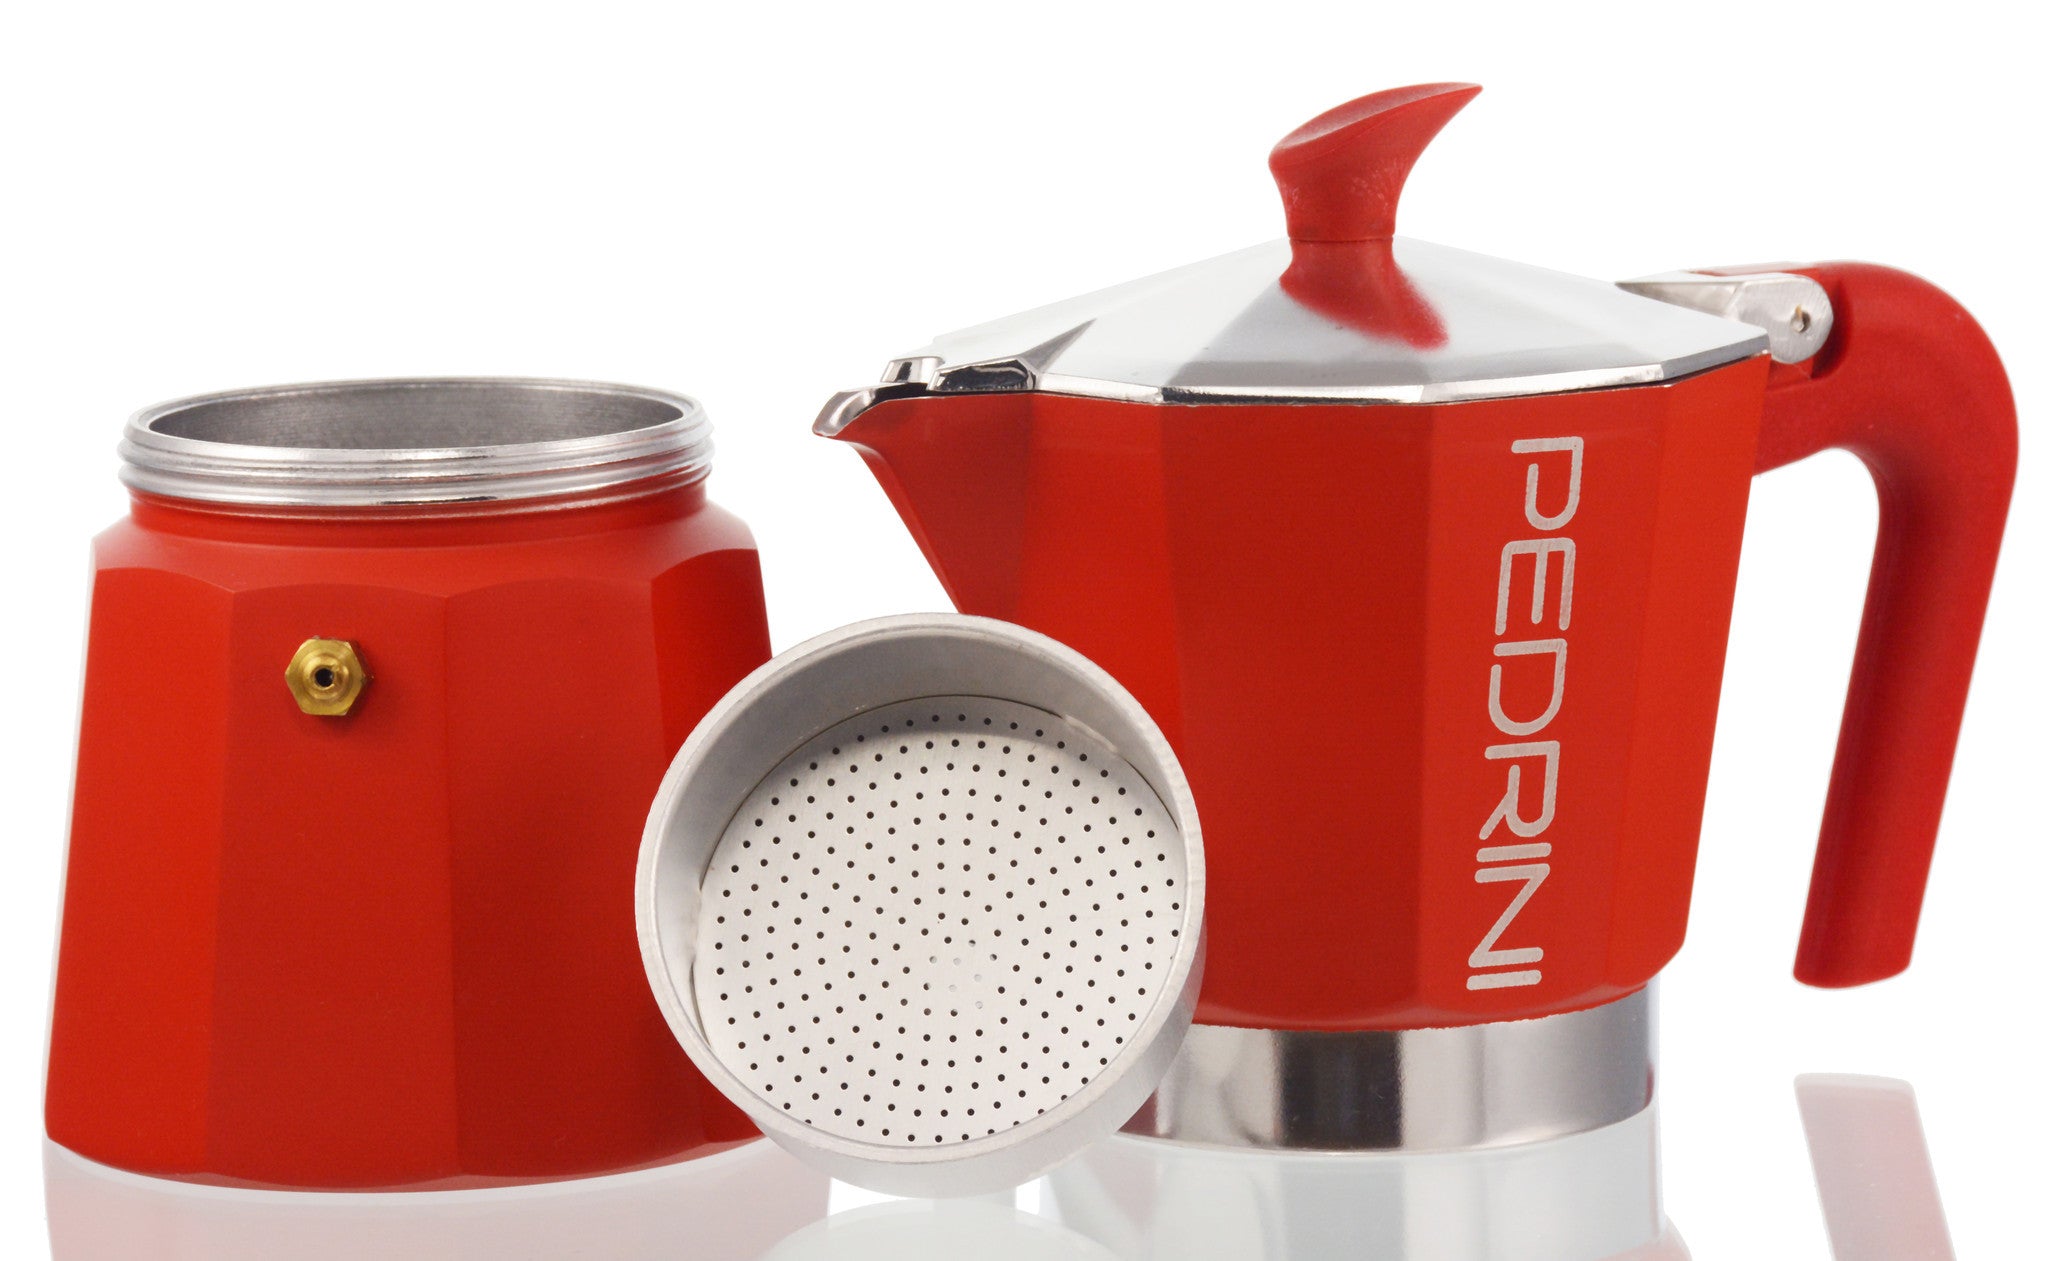 Espresso Coffee Maker Moka Pot: PEDRINI ITALY Polished Aluminium